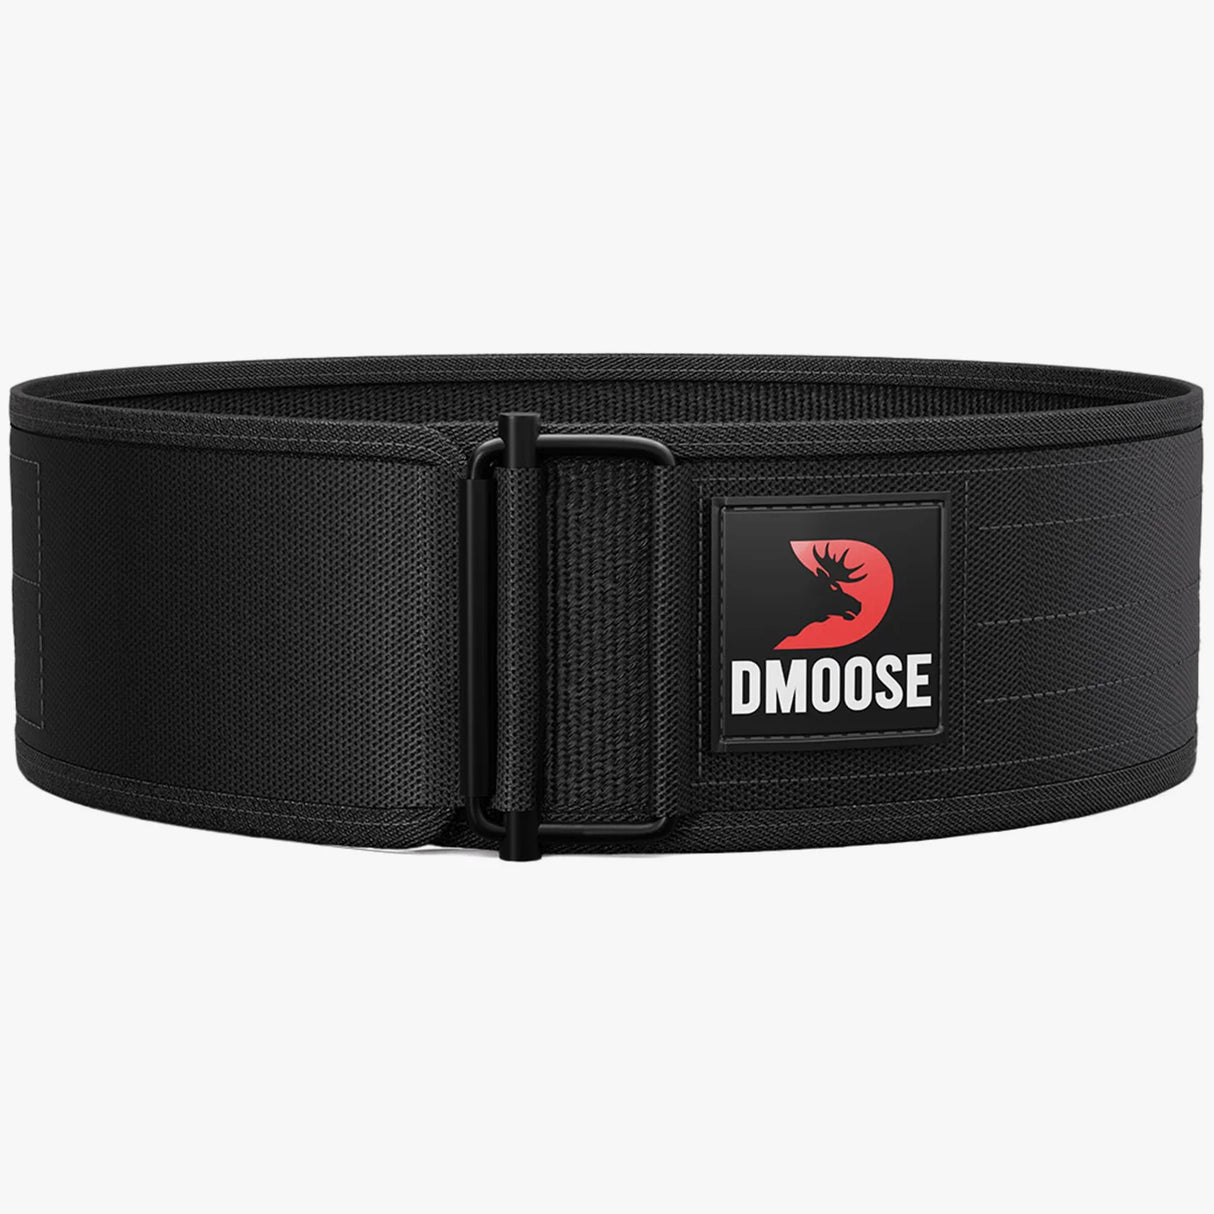 DMoose Weightlifting belt